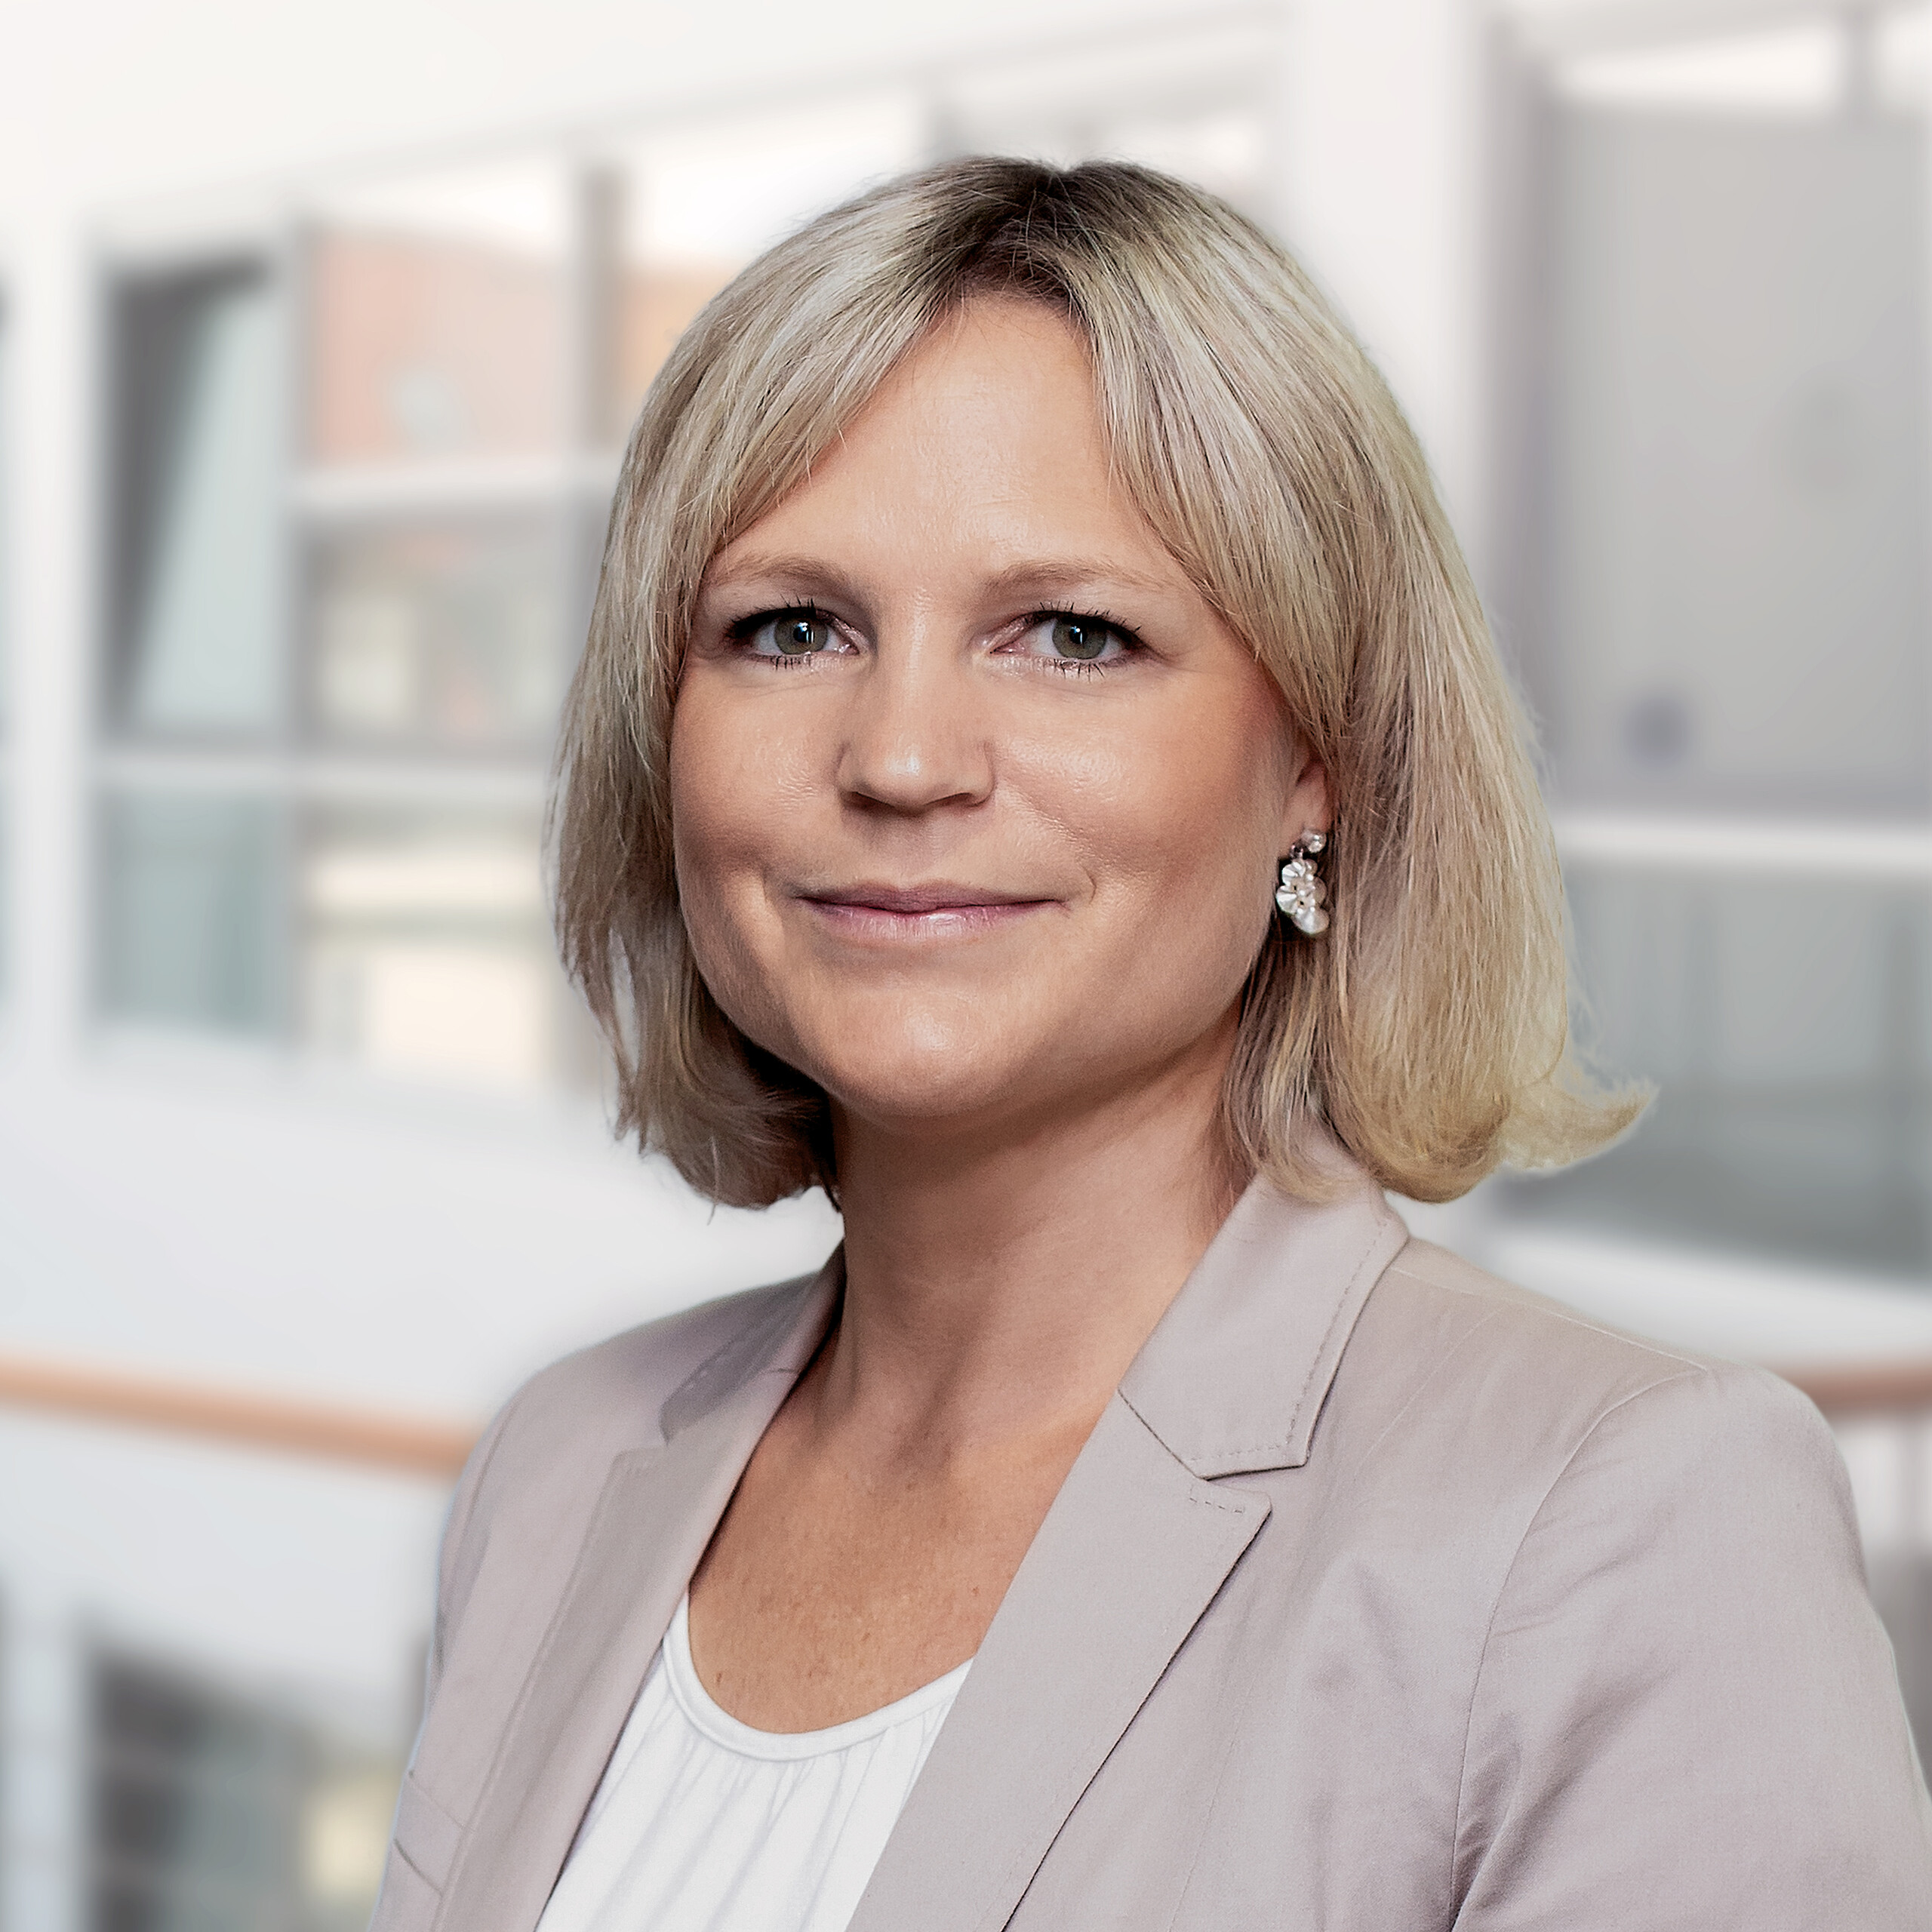 Annette Kröger, CEO North & Central Europe at Allianz Real Estate